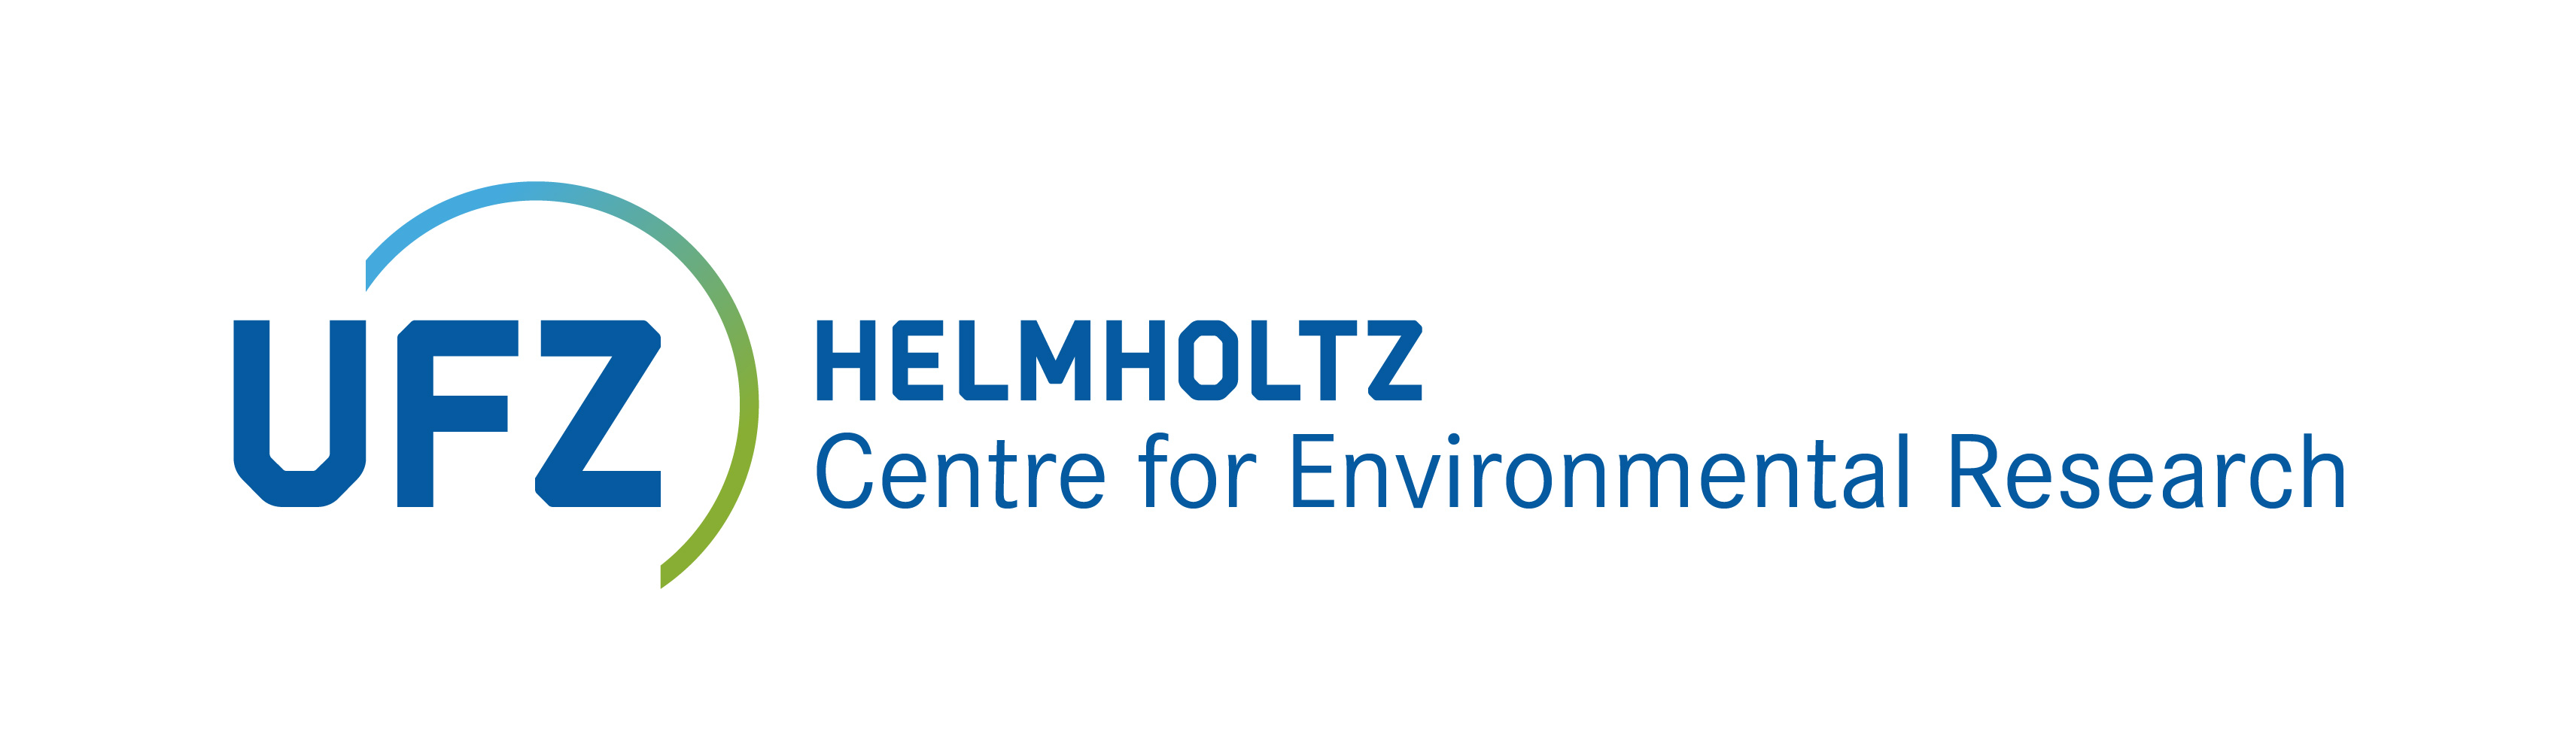 Helmholtz Cetre for Environmental Research